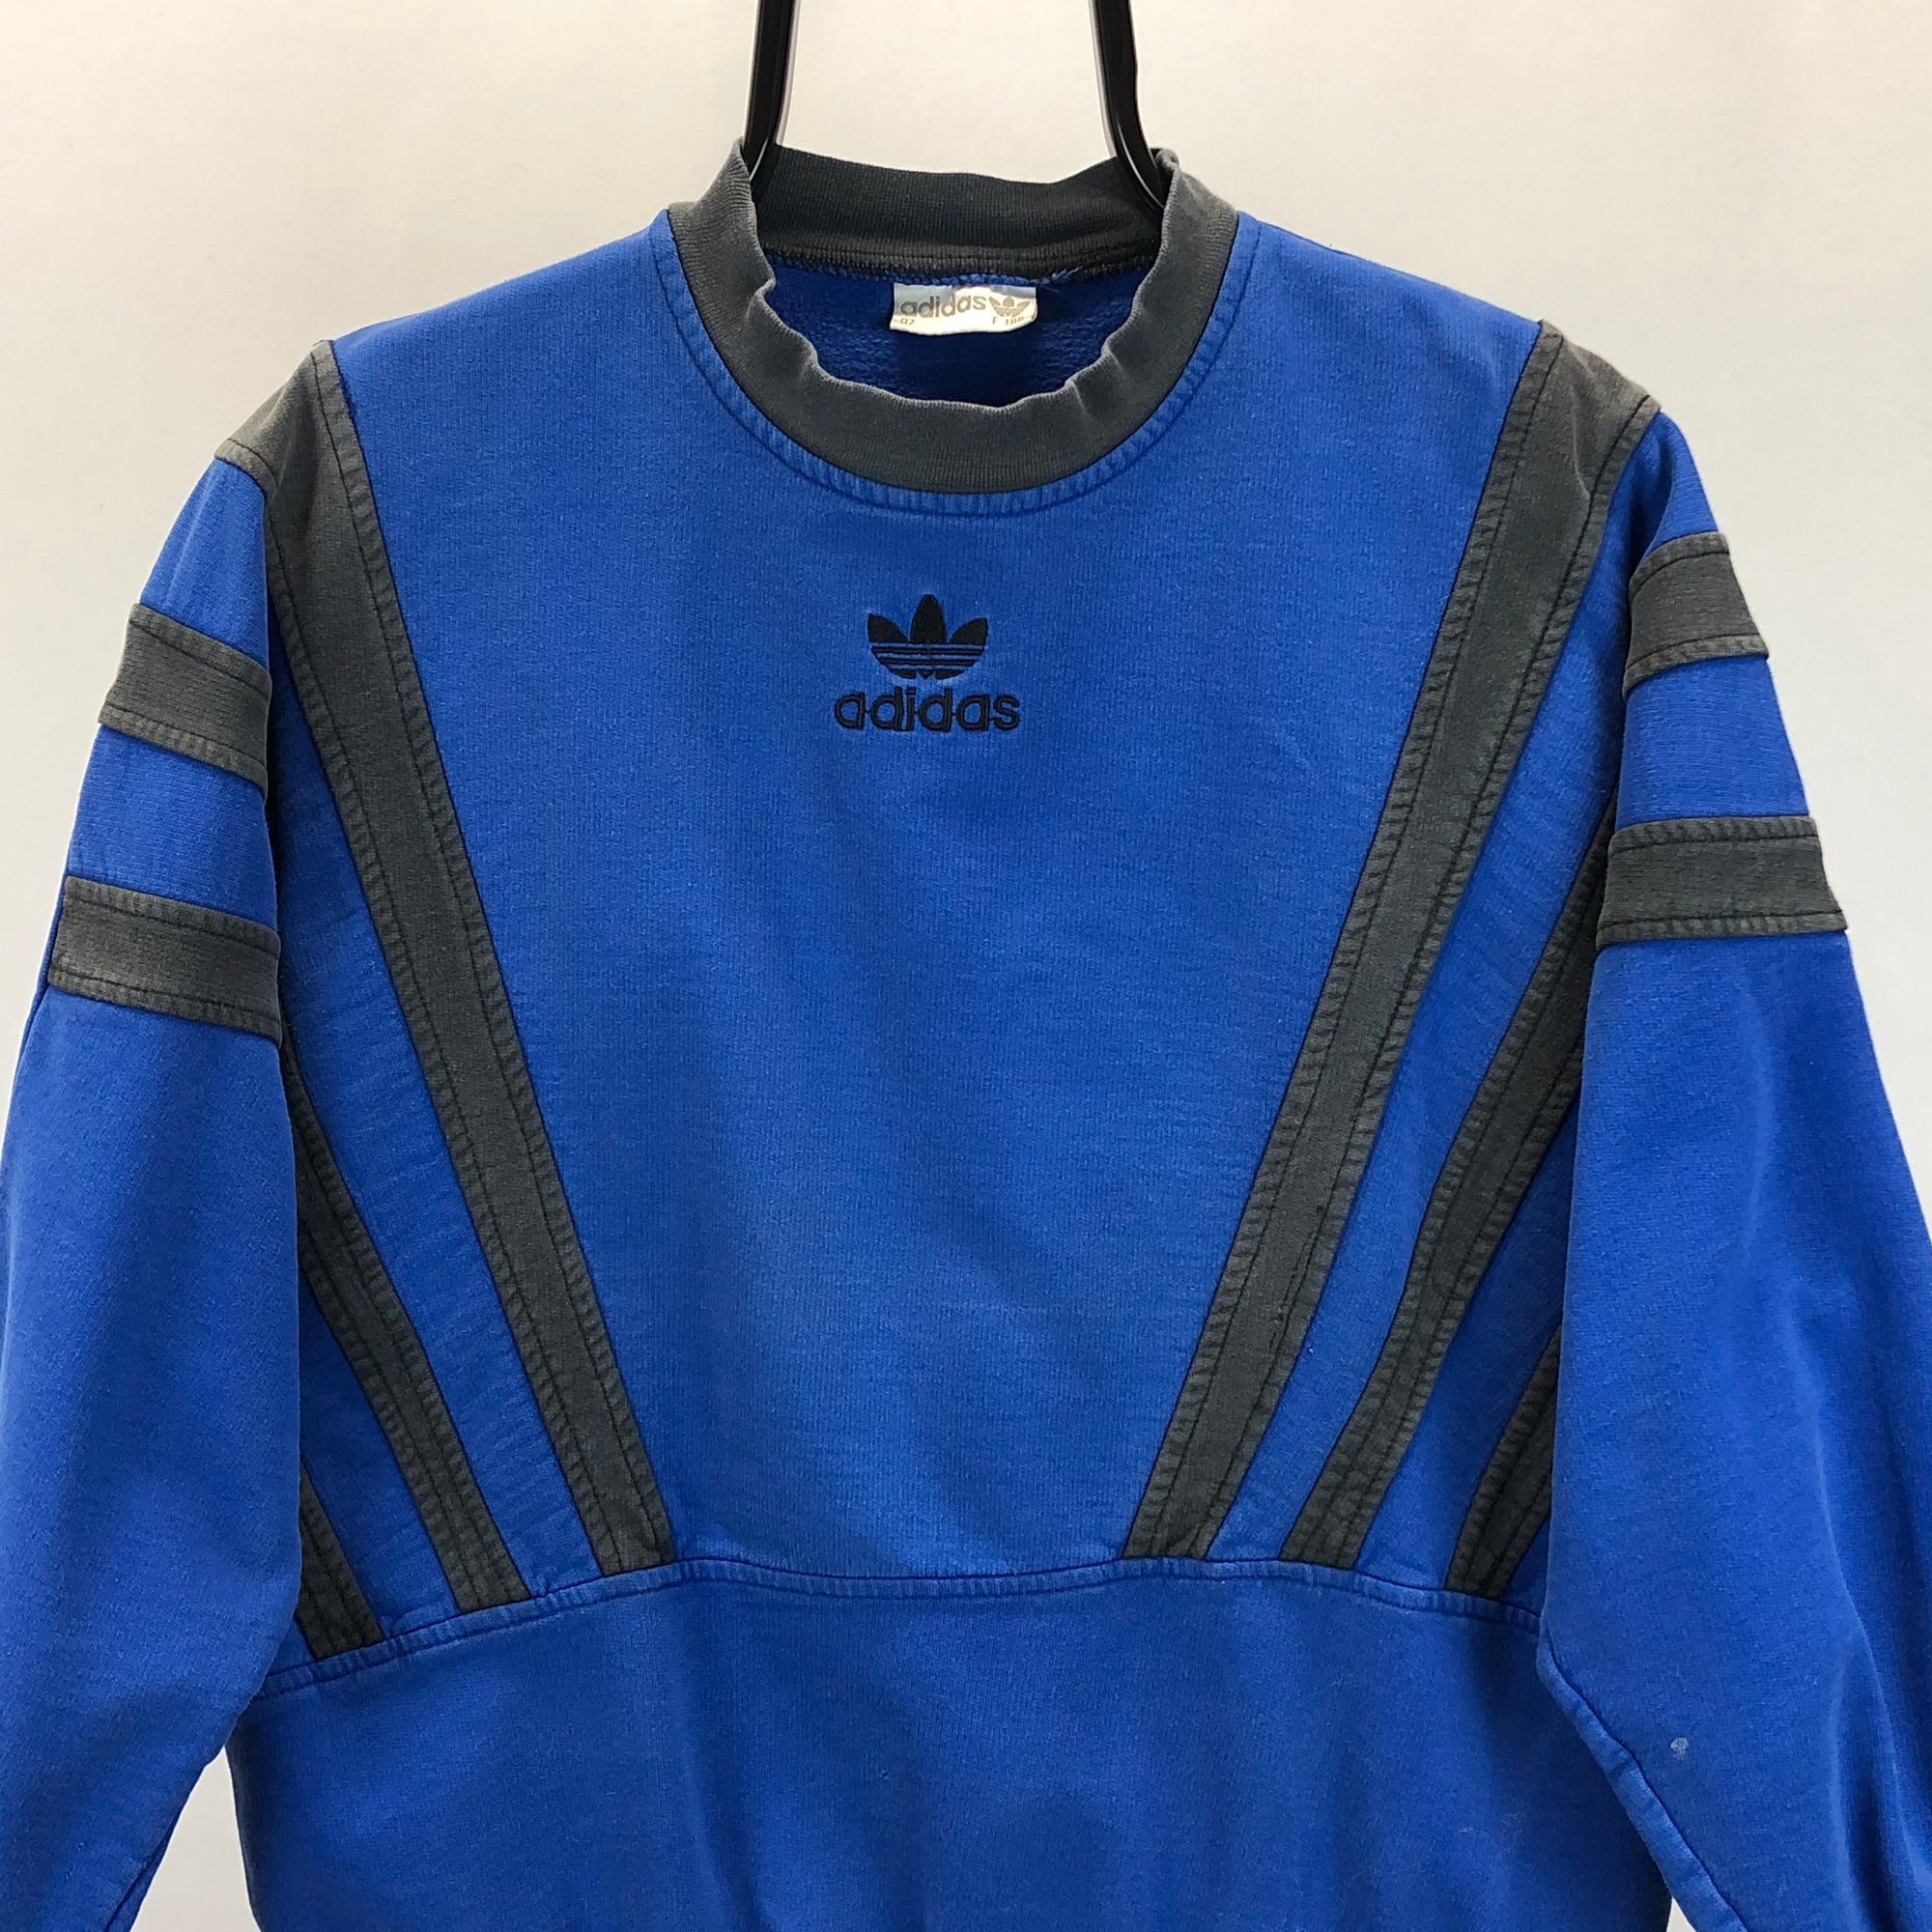 Vintage 80s Adidas Centre Logo Sweatshirt in Washed Blue/Black - Men's Small/Women's Medium